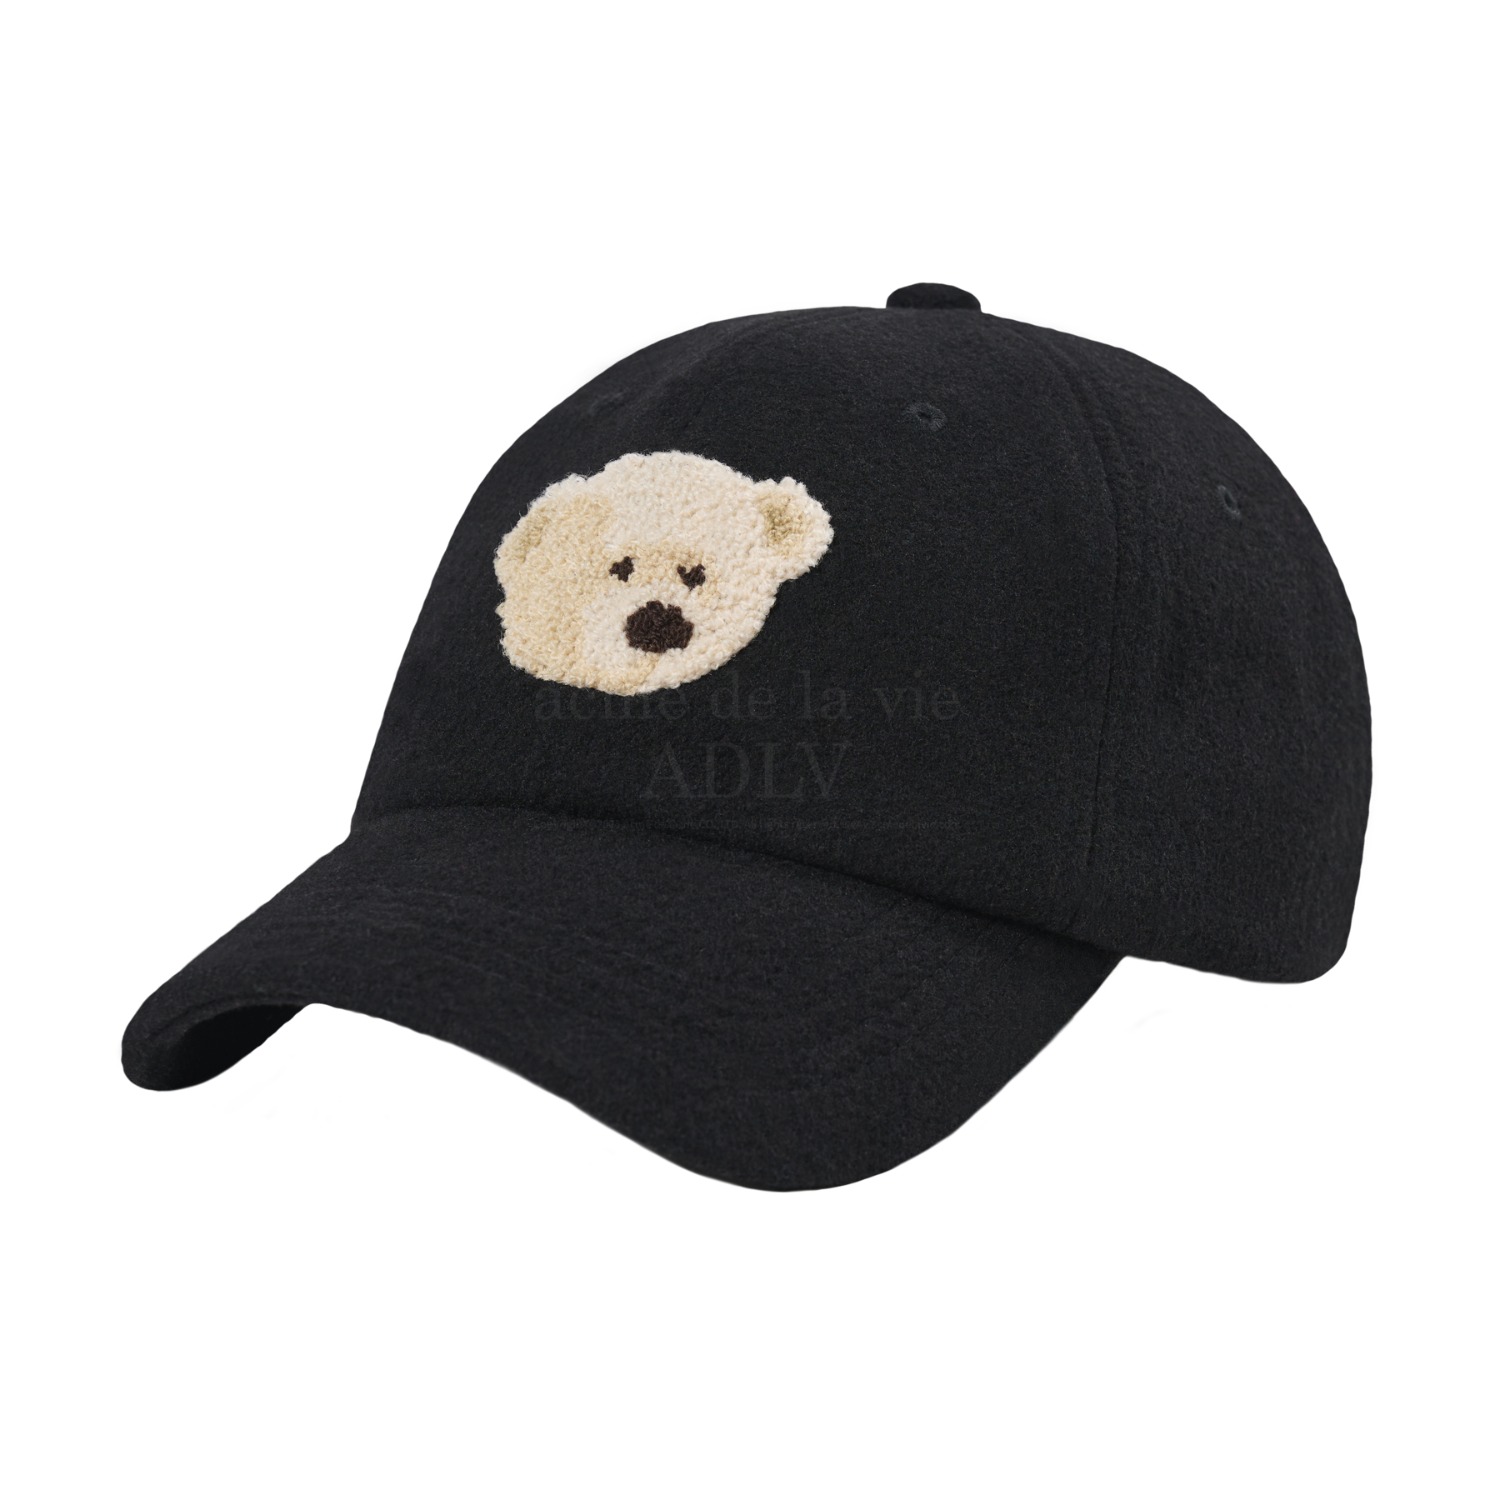 ADLV-[아크메드라비] BOUCLE BEAR WOOL BALL CAP BLACK(2월17일 입고예정)